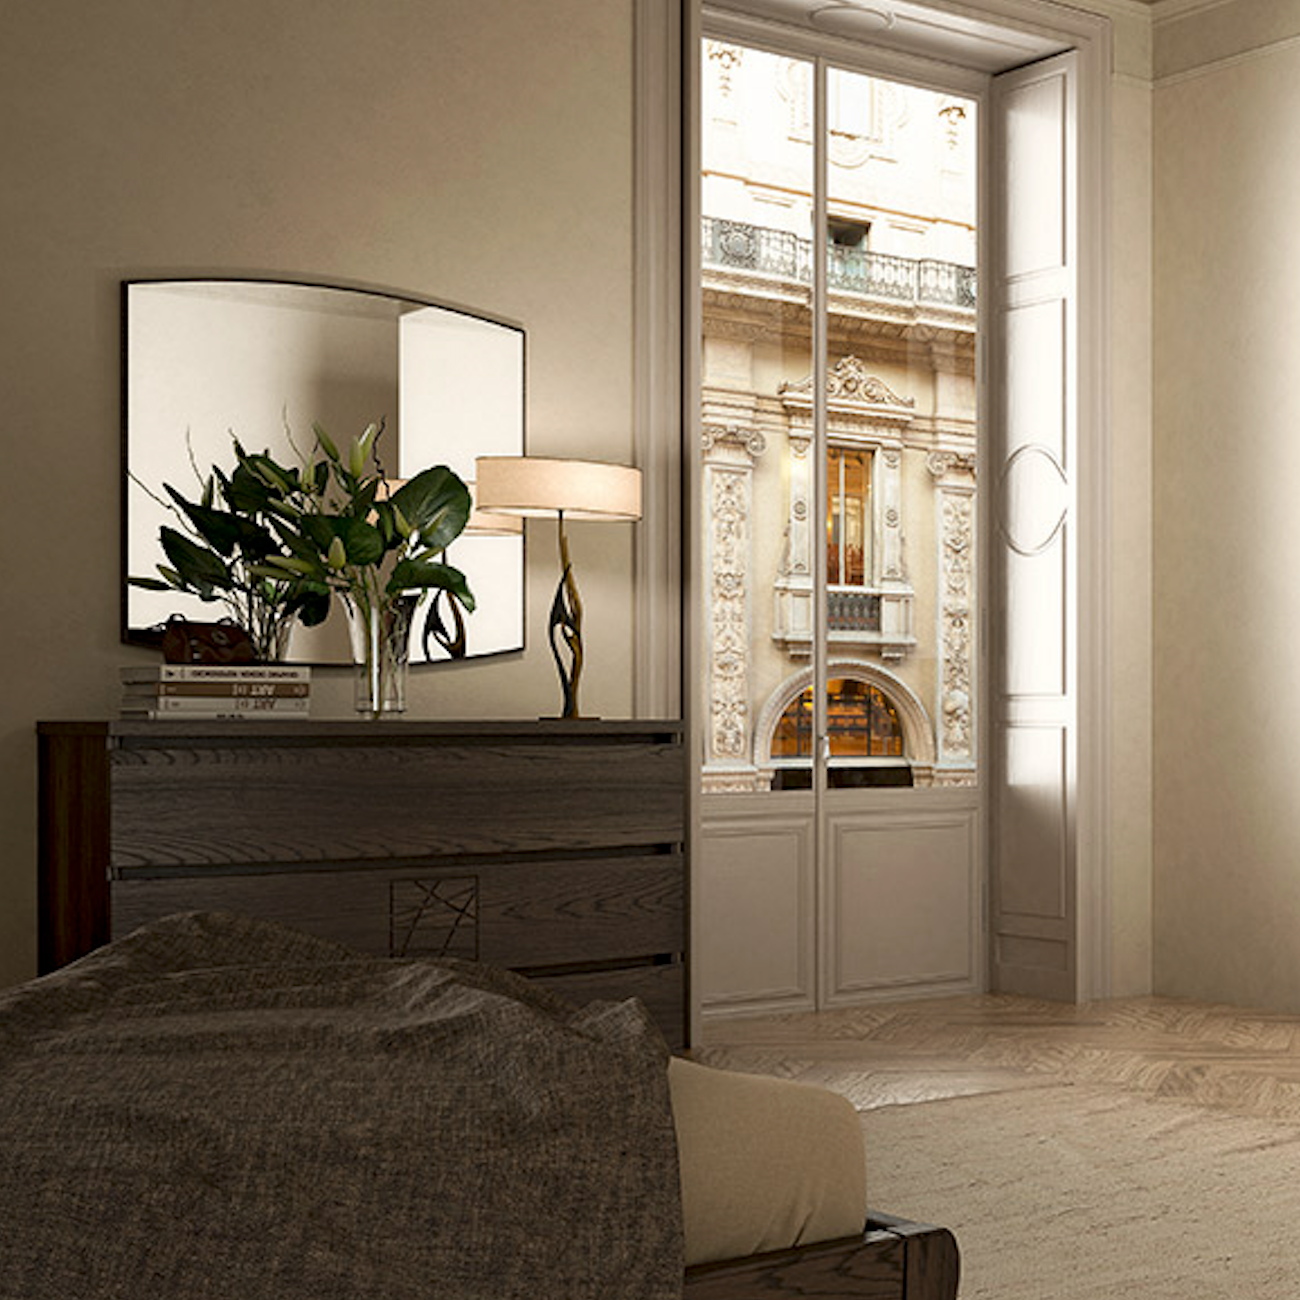 Modernes, lackiertes Doppelzimmer komplett aus Walnussholz, Kollektion Modigliani Piombini 